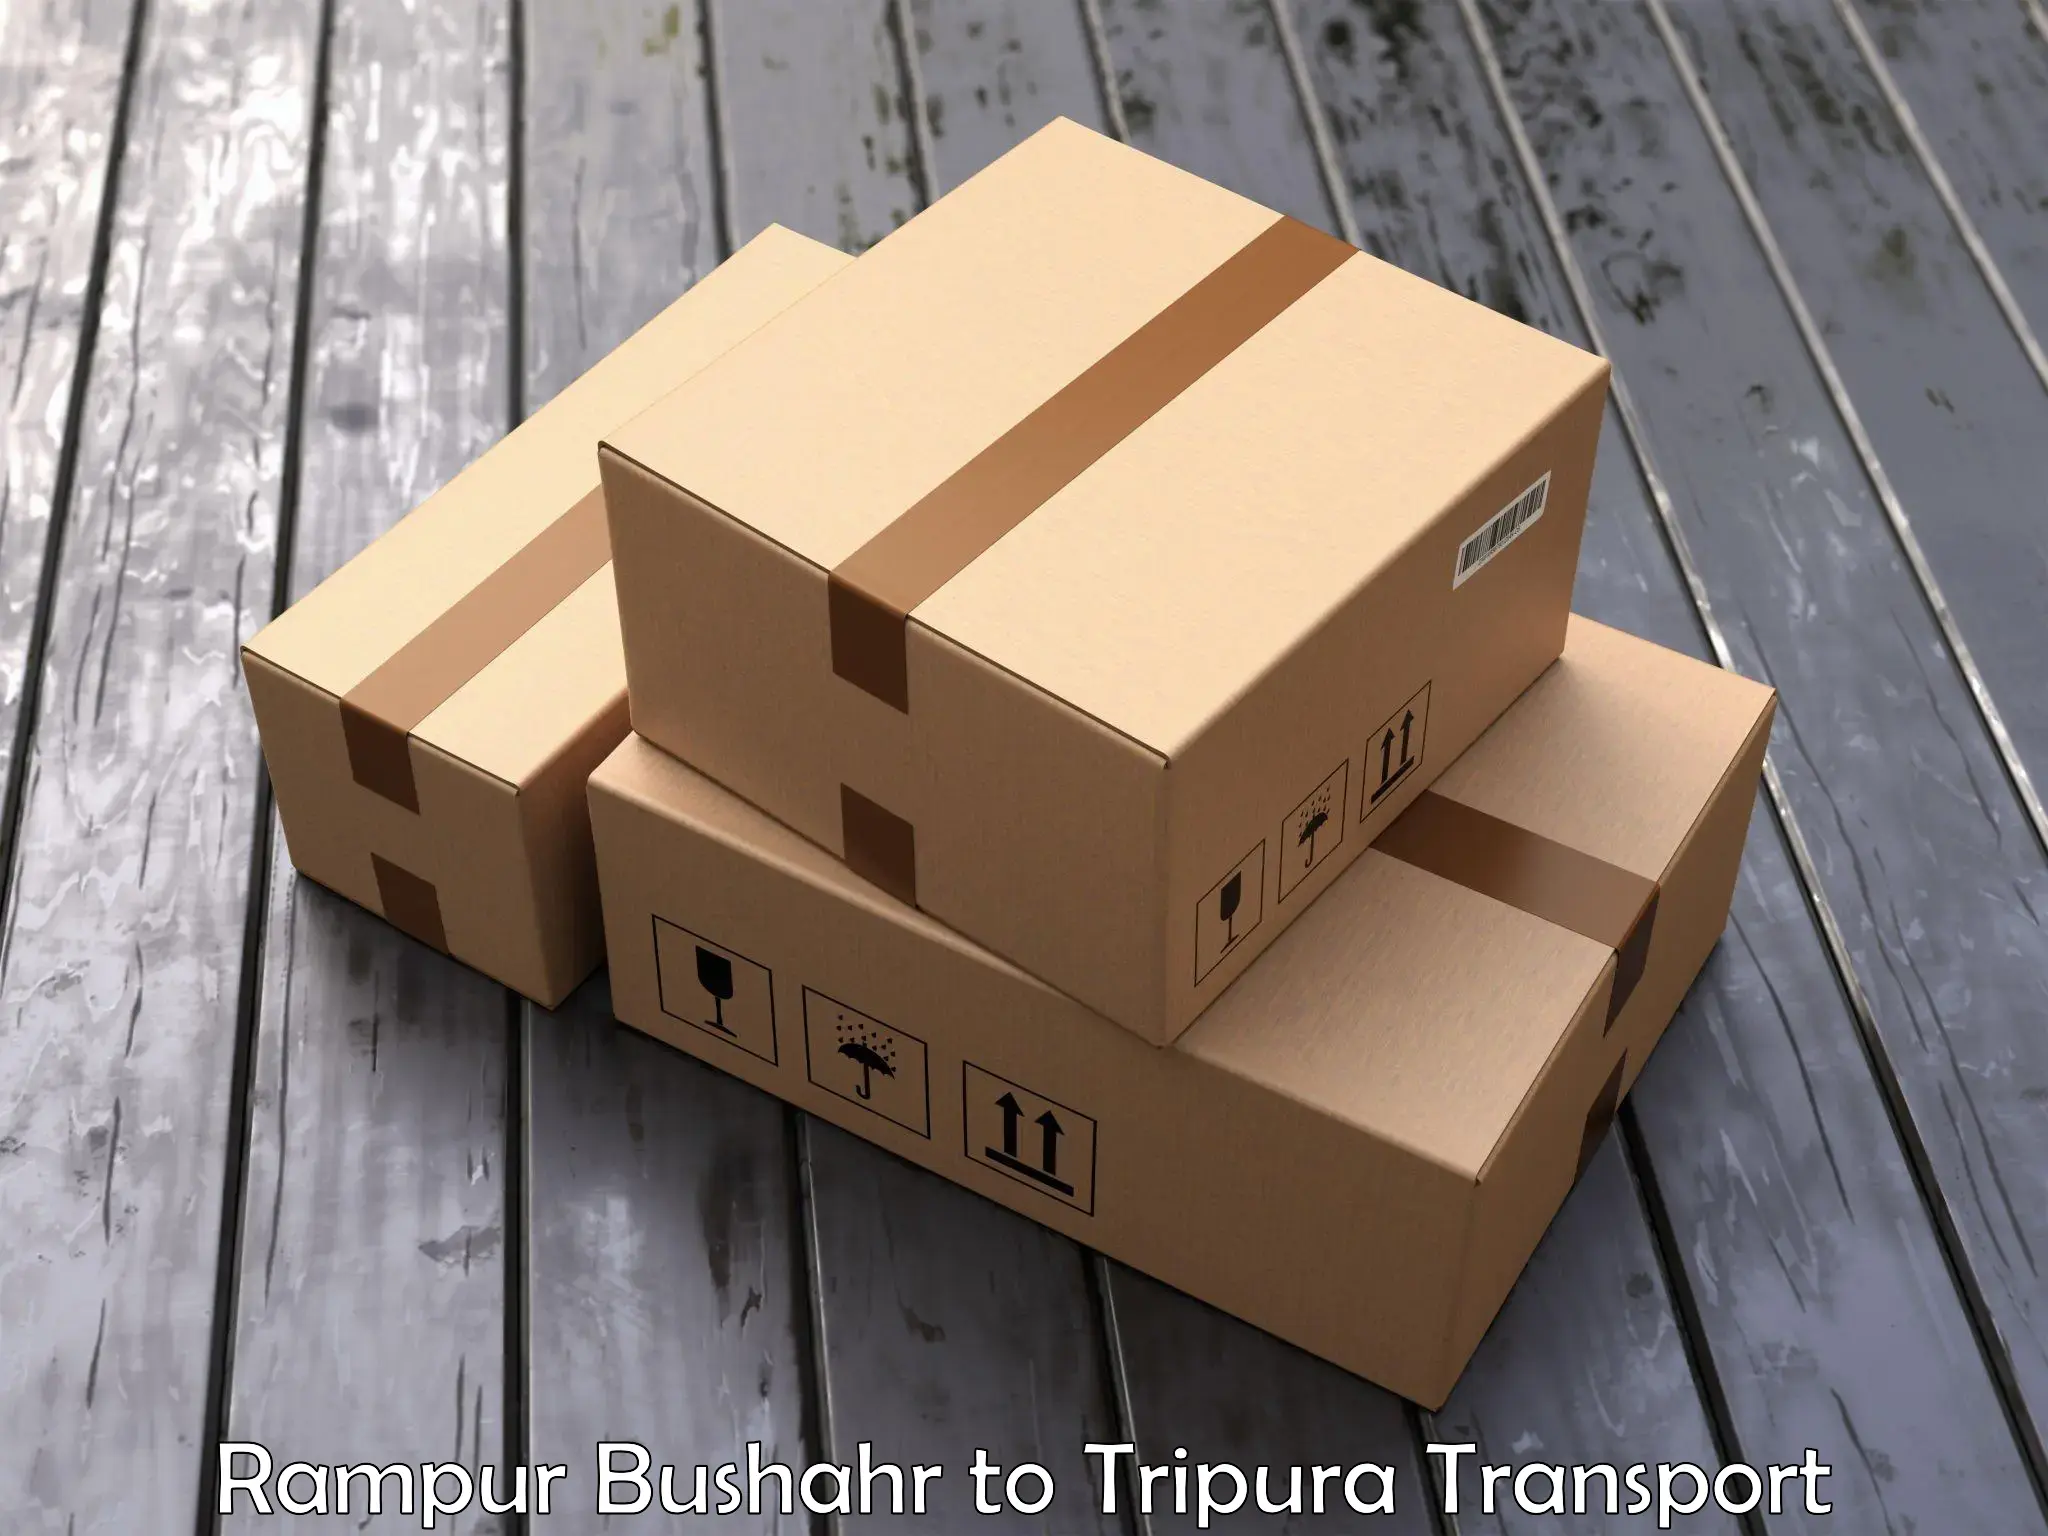 Cycle transportation service Rampur Bushahr to Udaipur Tripura